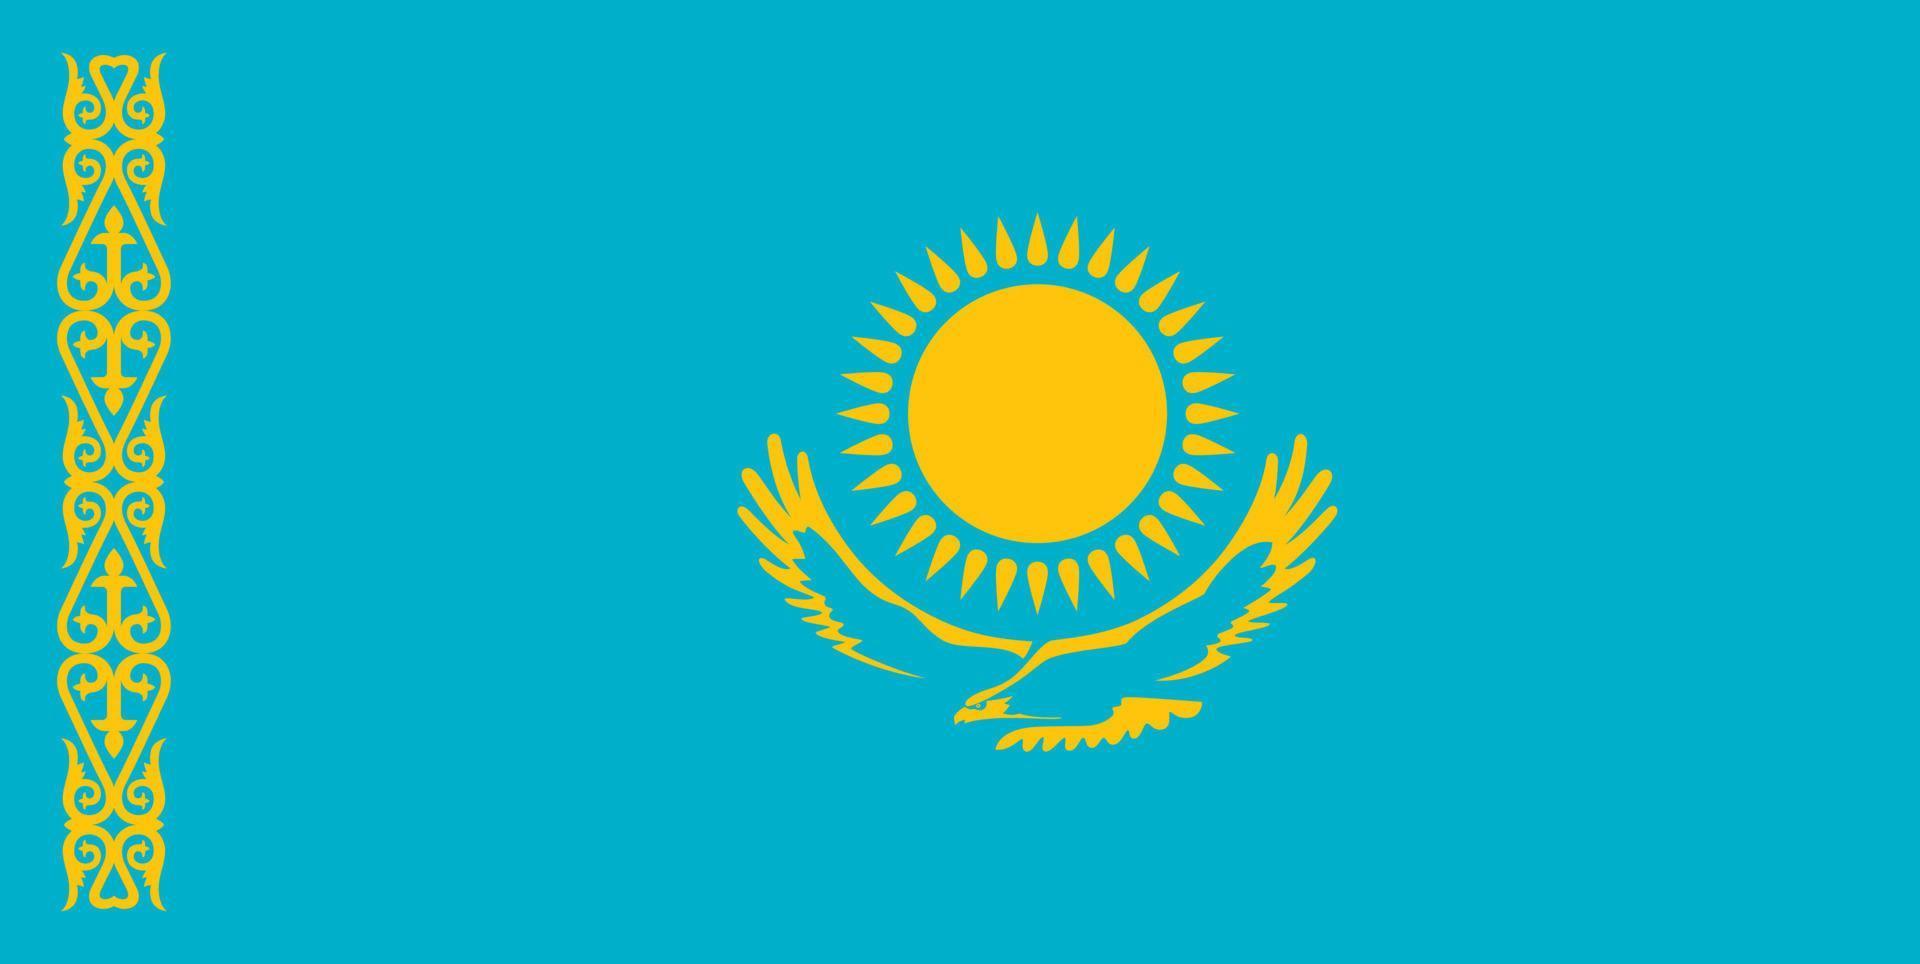 kazakstans flagga standardstorlek i asien. vektor illustration